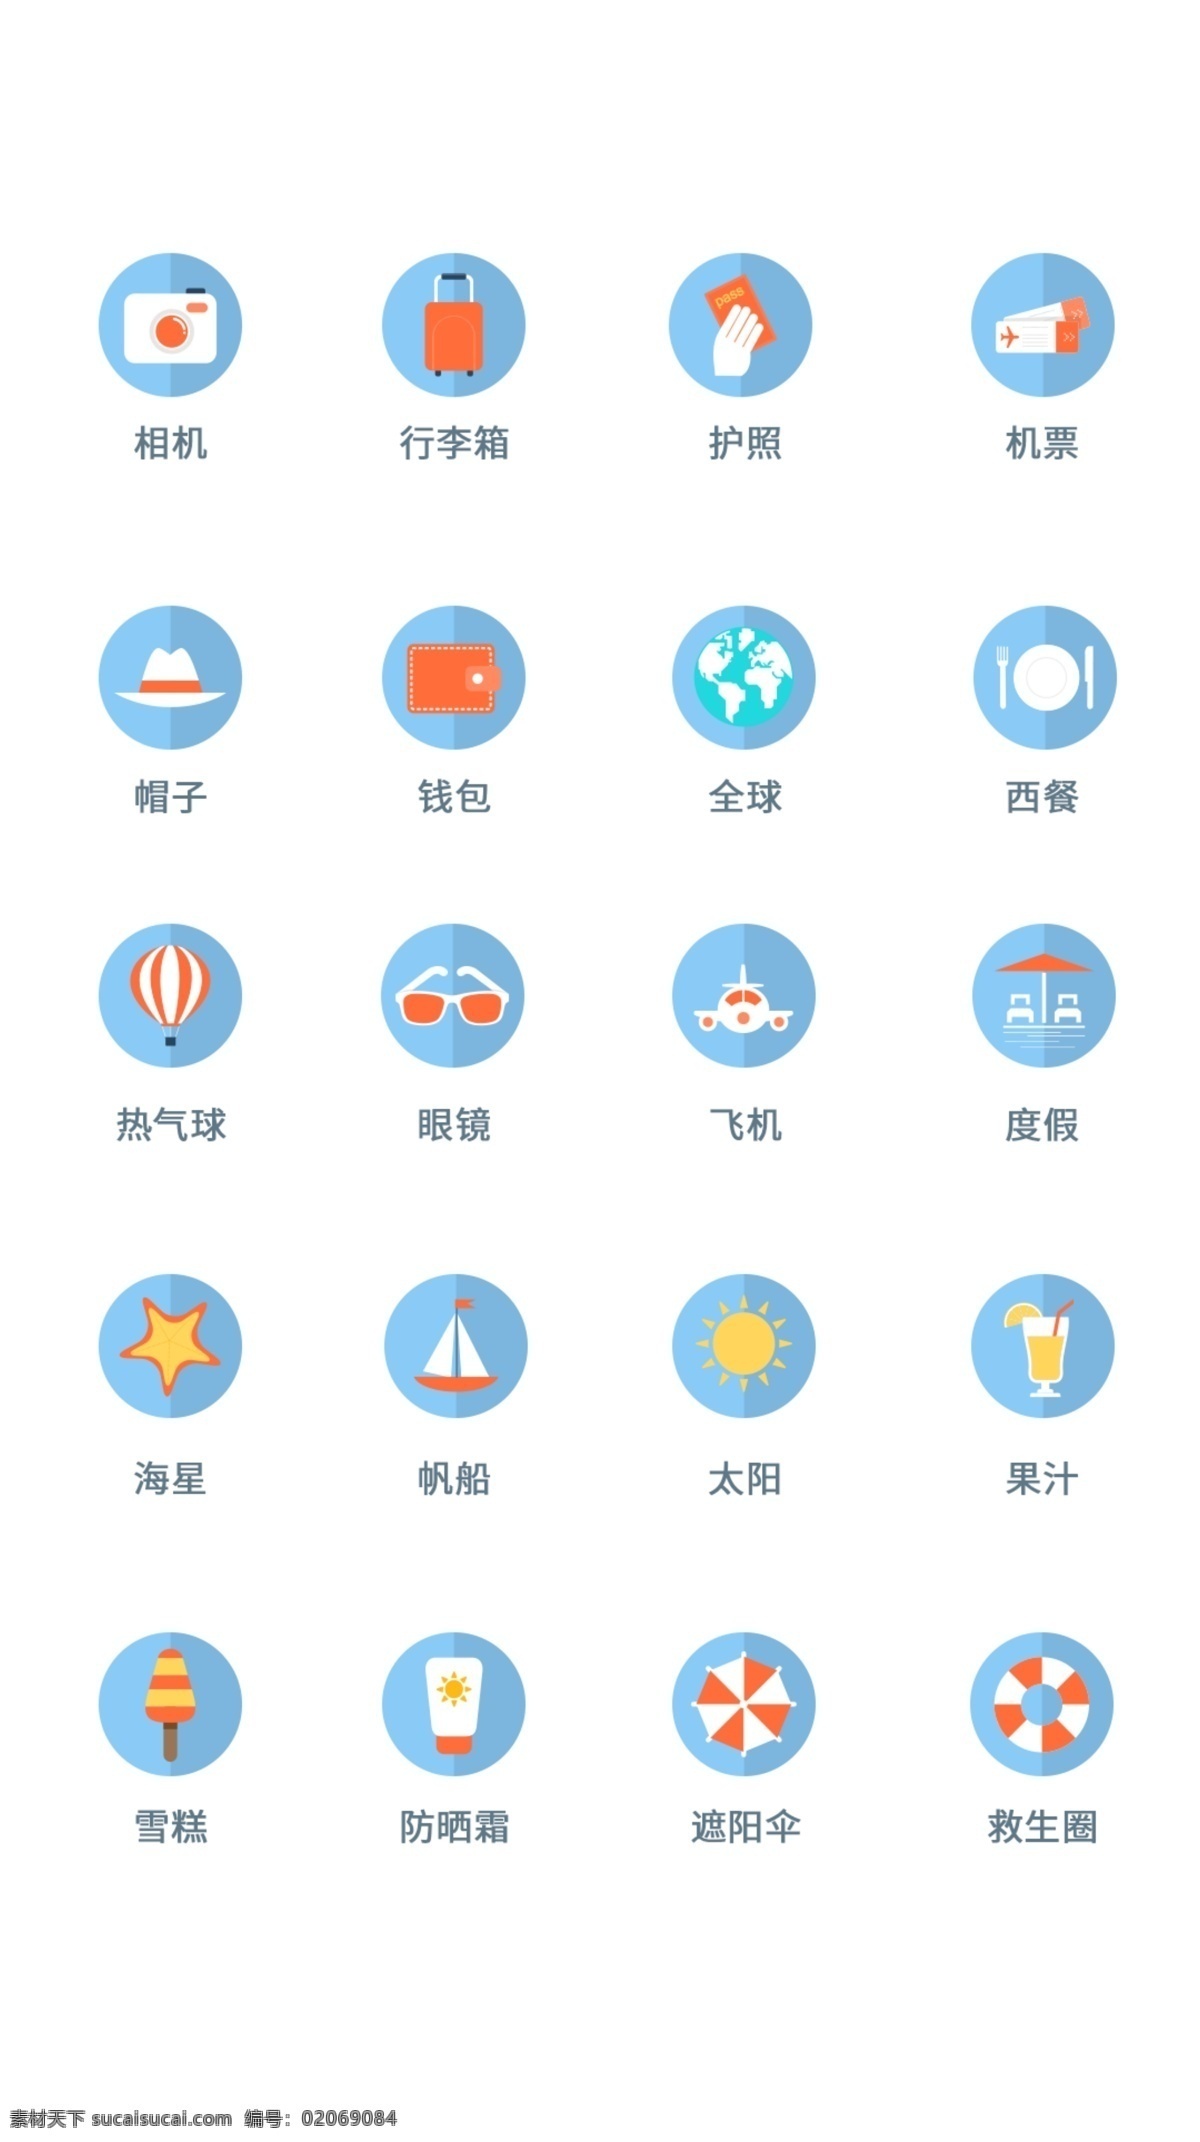 ui 旅行 icon 图标 简约icon 时尚图标 旅行icon ui设计 icon设计 旅游图标 图标设计 类